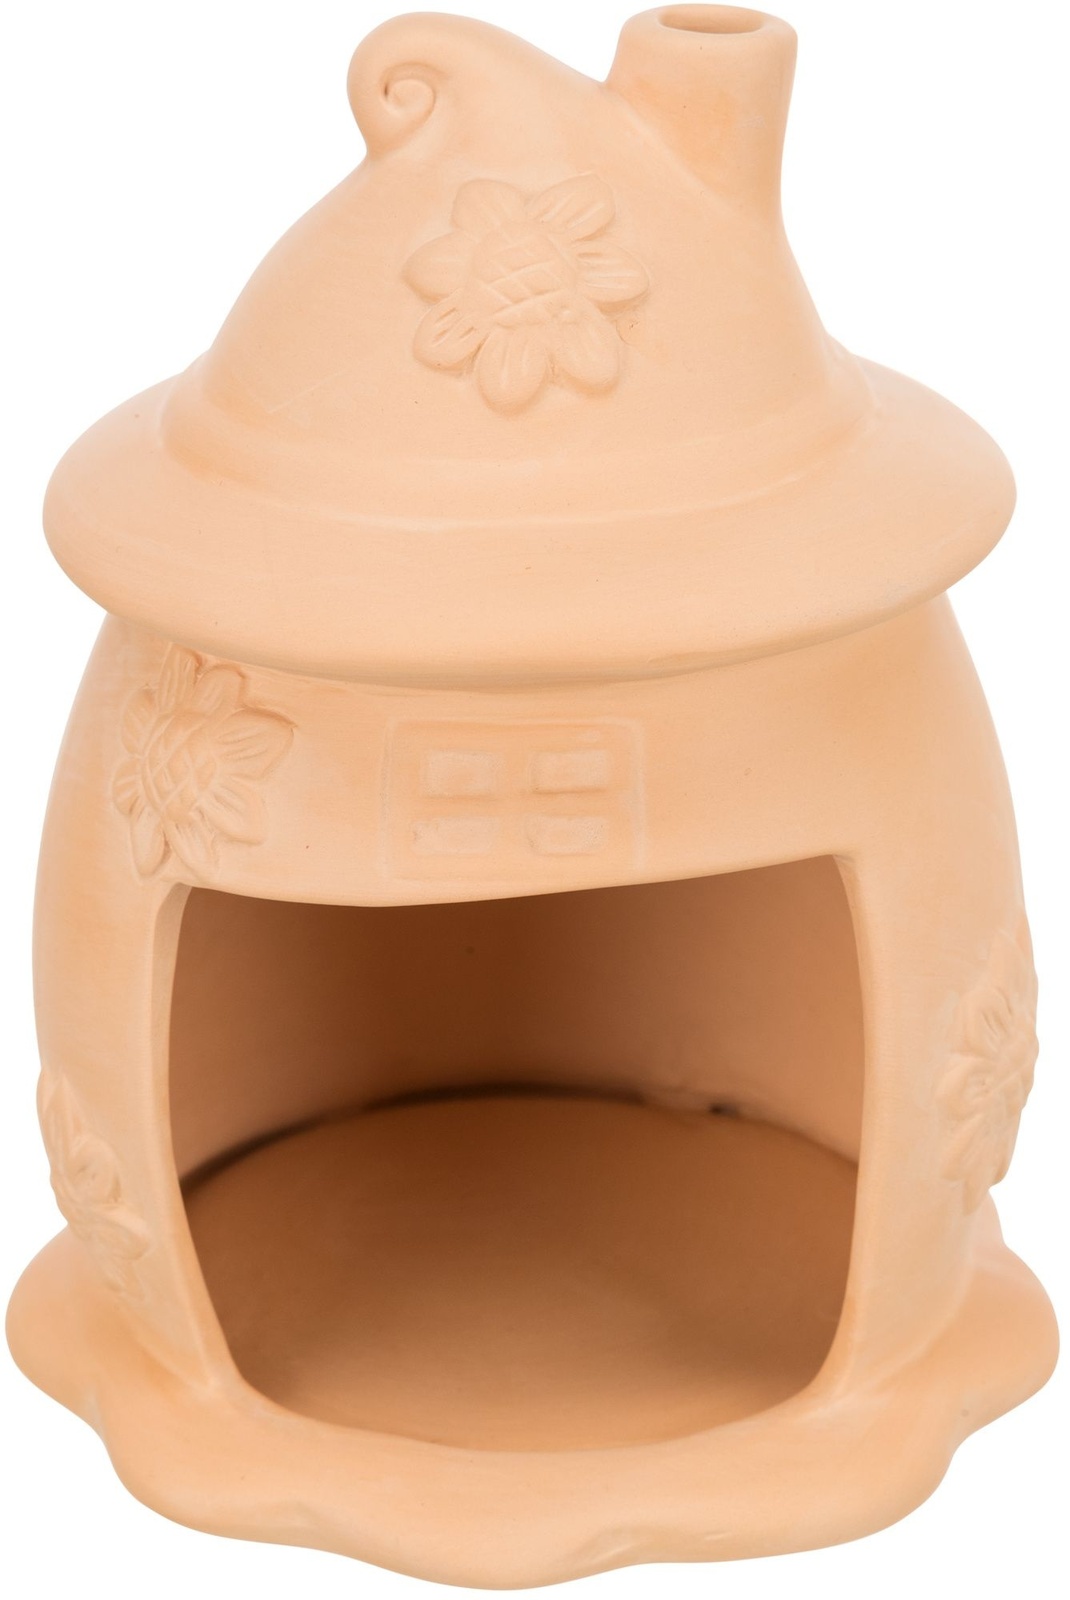 Trixie домик для мышей, керамика, терракотовый (330 г) Trixie домик для мышей, керамика, терракотовый (330 г) - фото 1